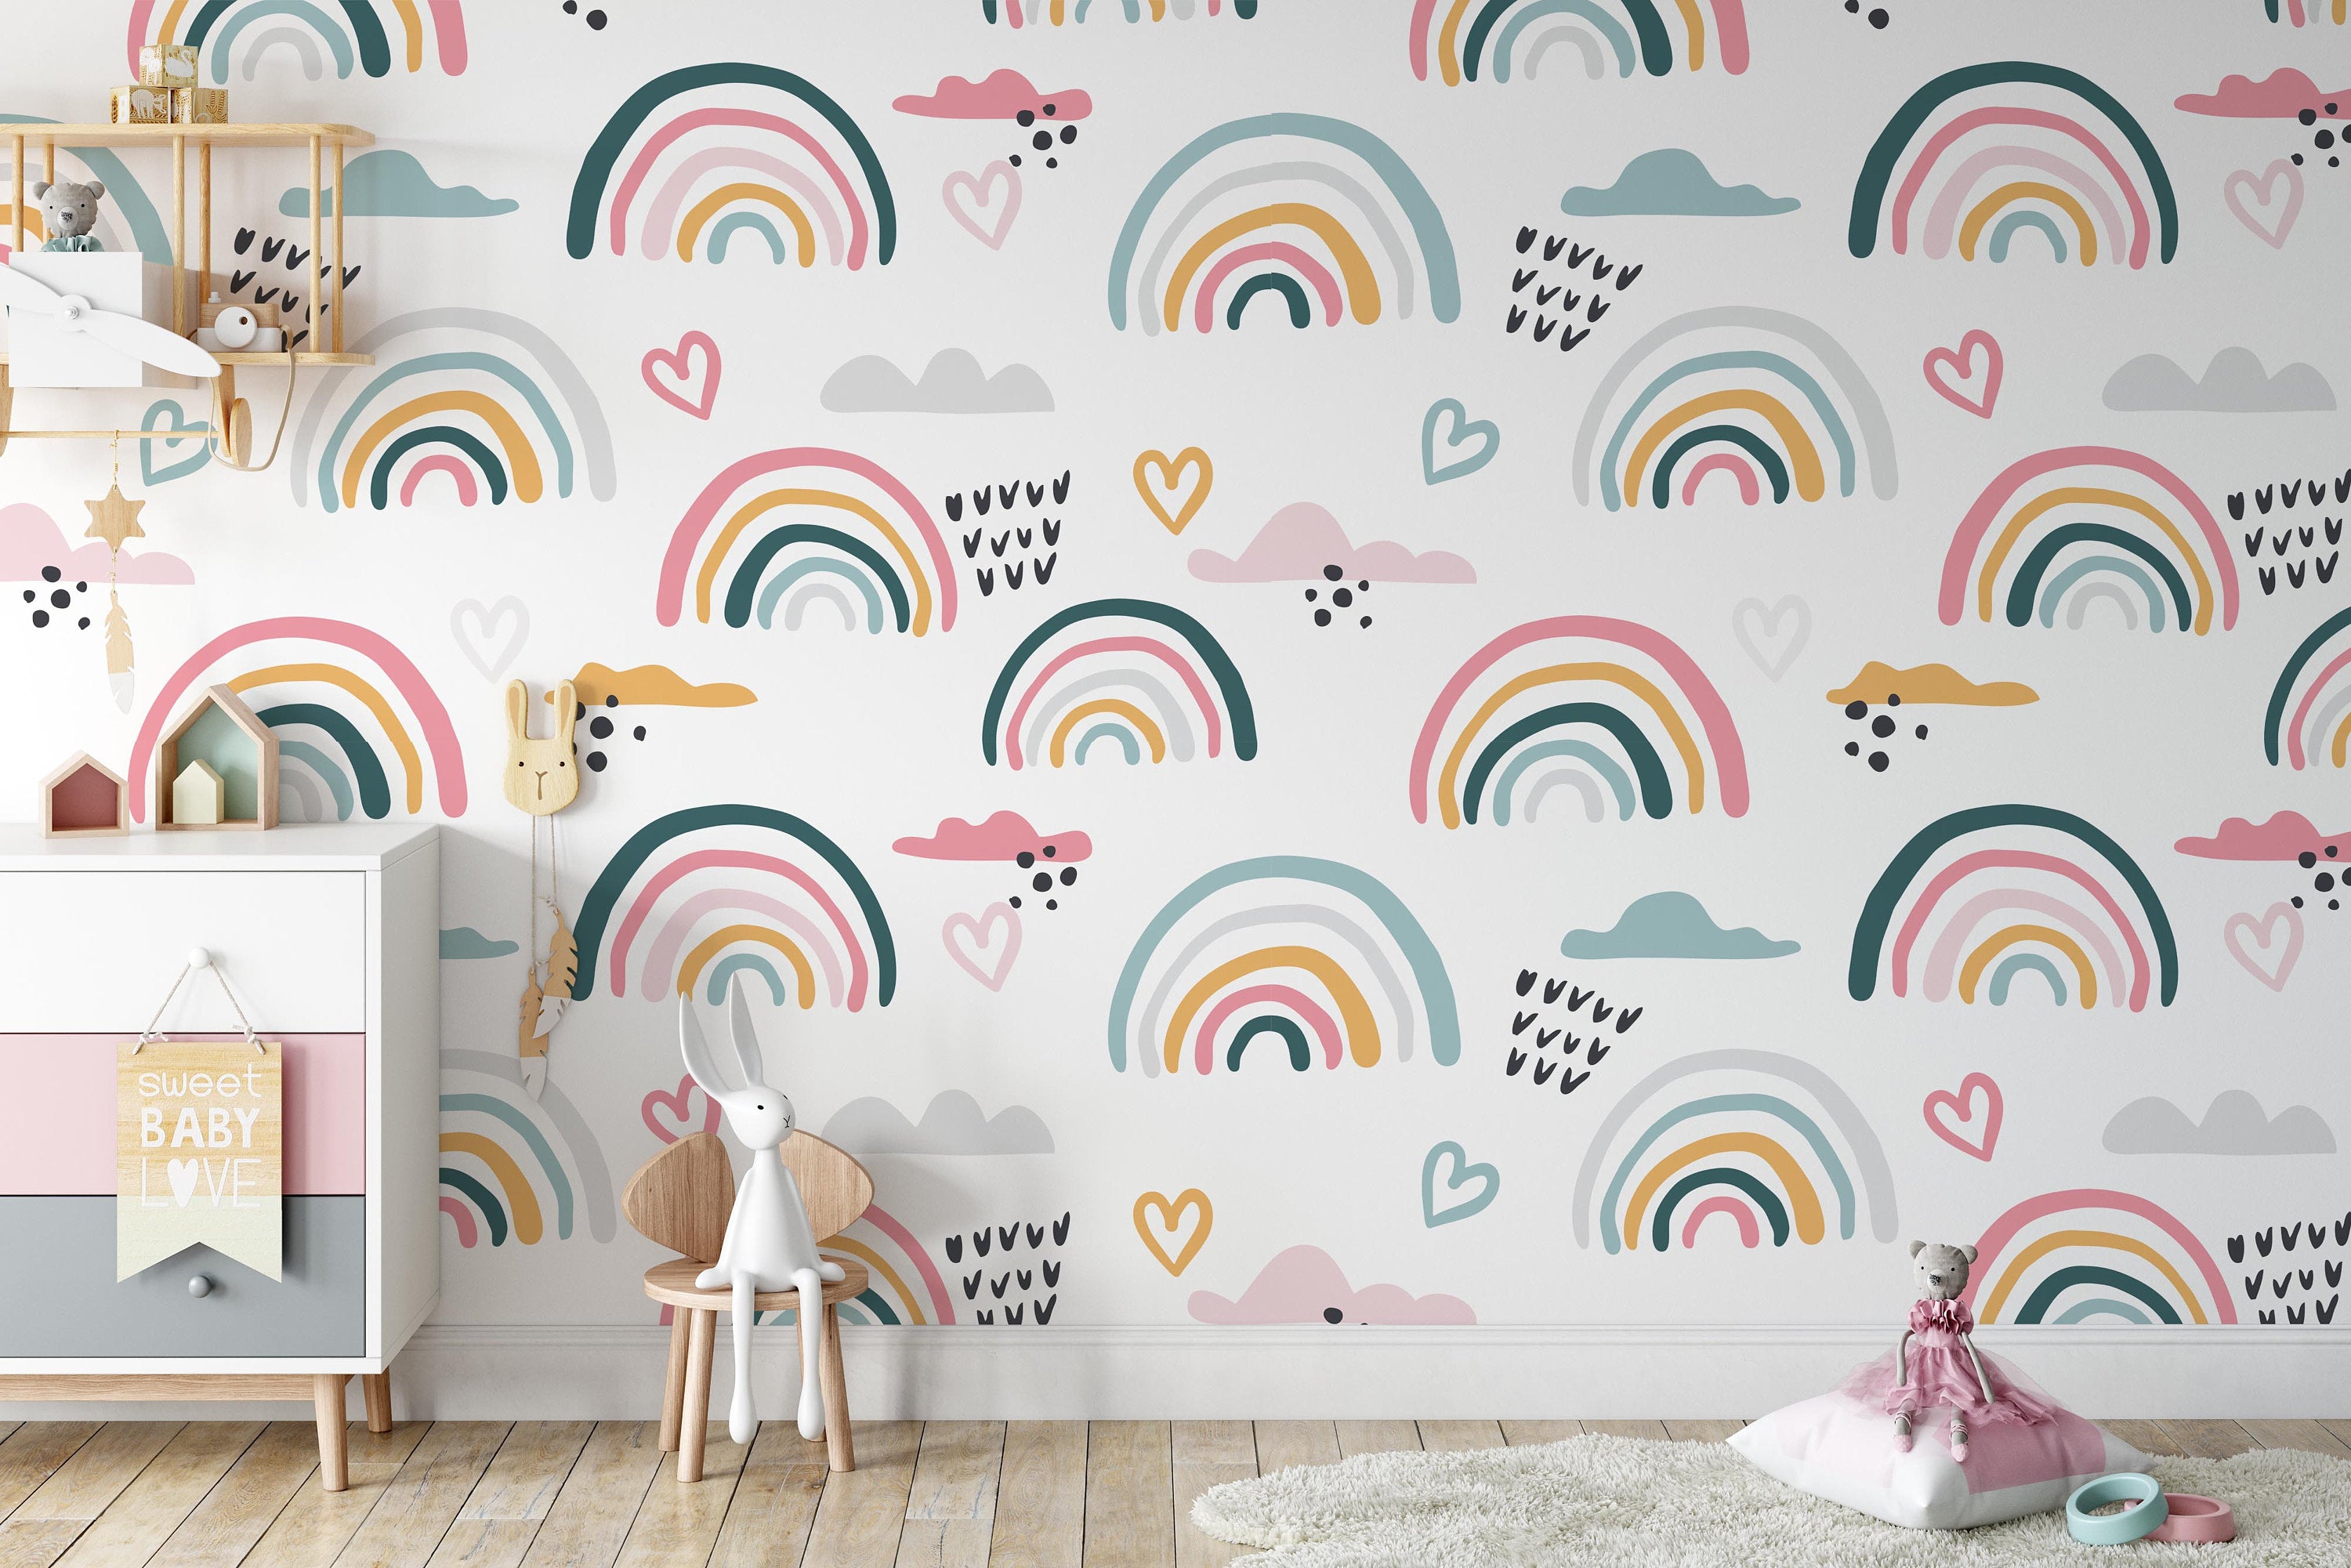 Hand Draw Rainbows Hearts Rain Clouds Wallpaper Self Adhesive Peel & Stick Wall Decoration Minimalistic Scandinavian Removable